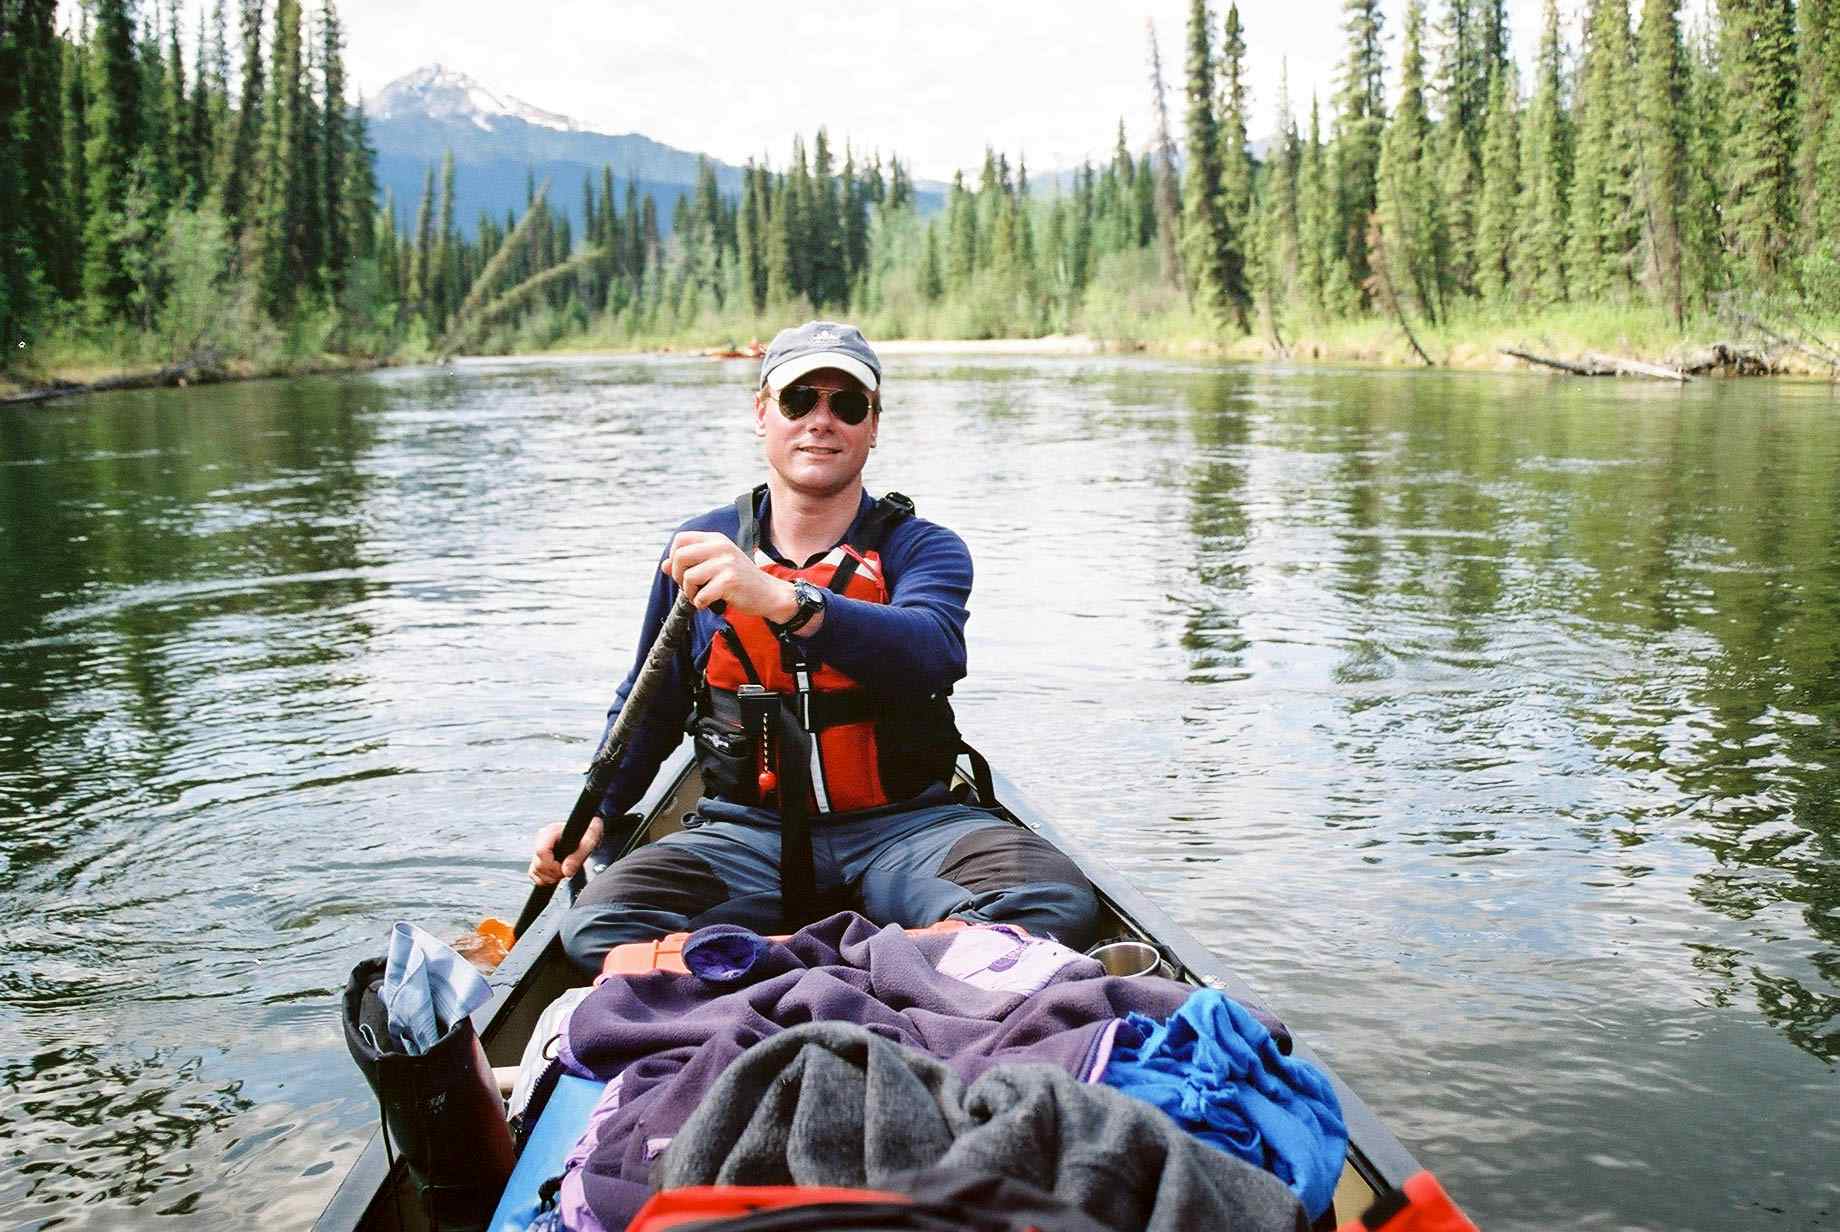 Yukon river canoe paddling Canada
Host image: Ruby Range Adventure